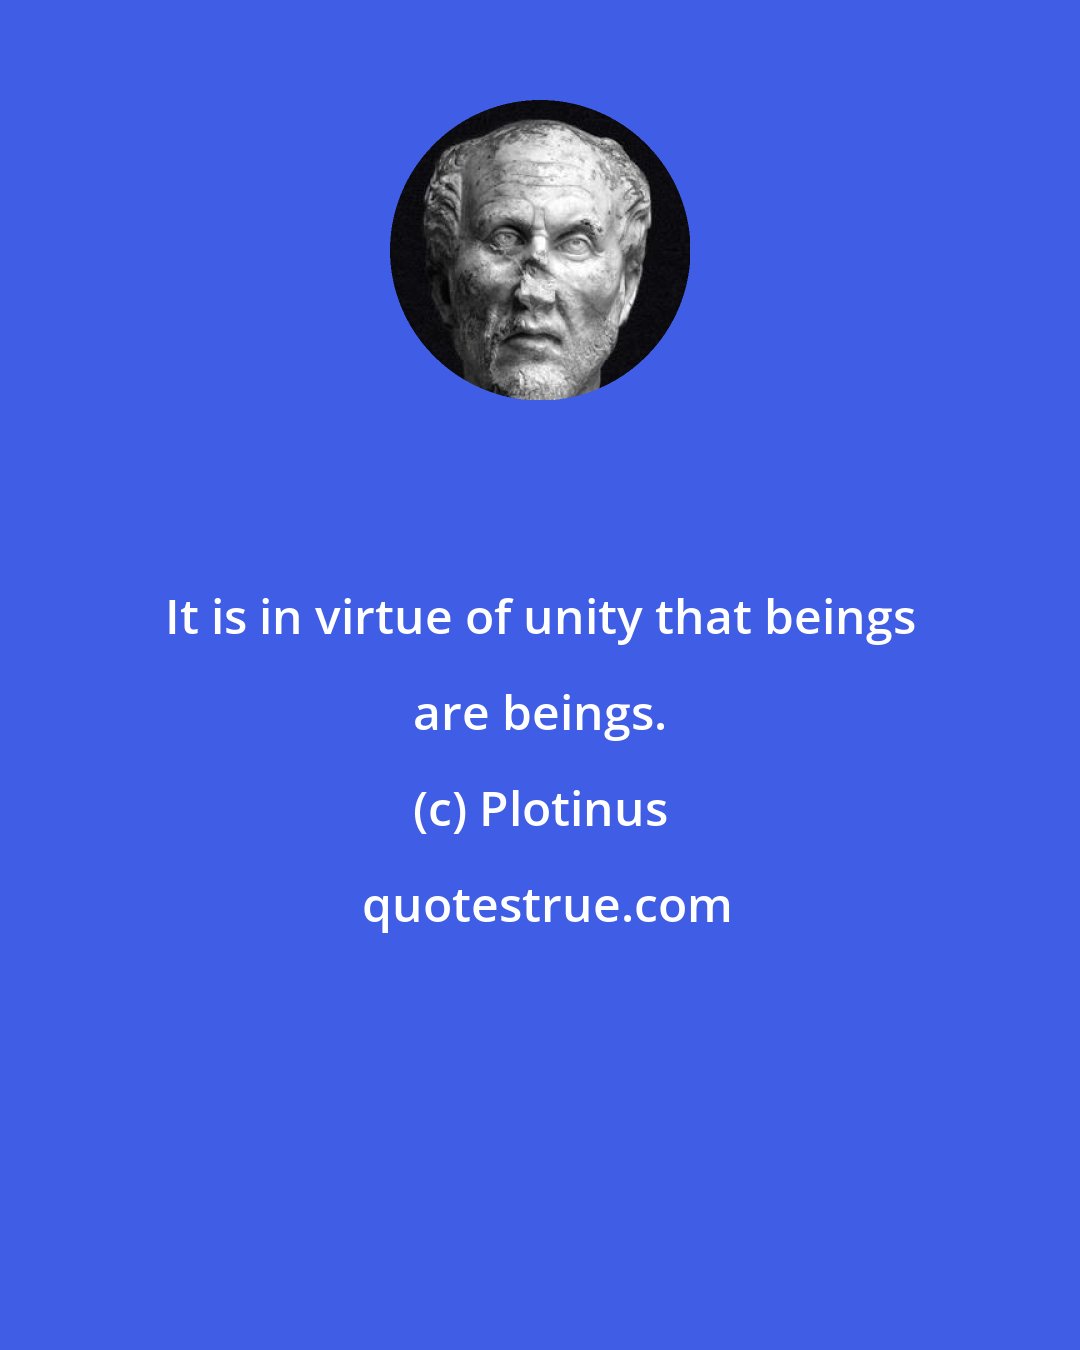 Plotinus: It is in virtue of unity that beings are beings.